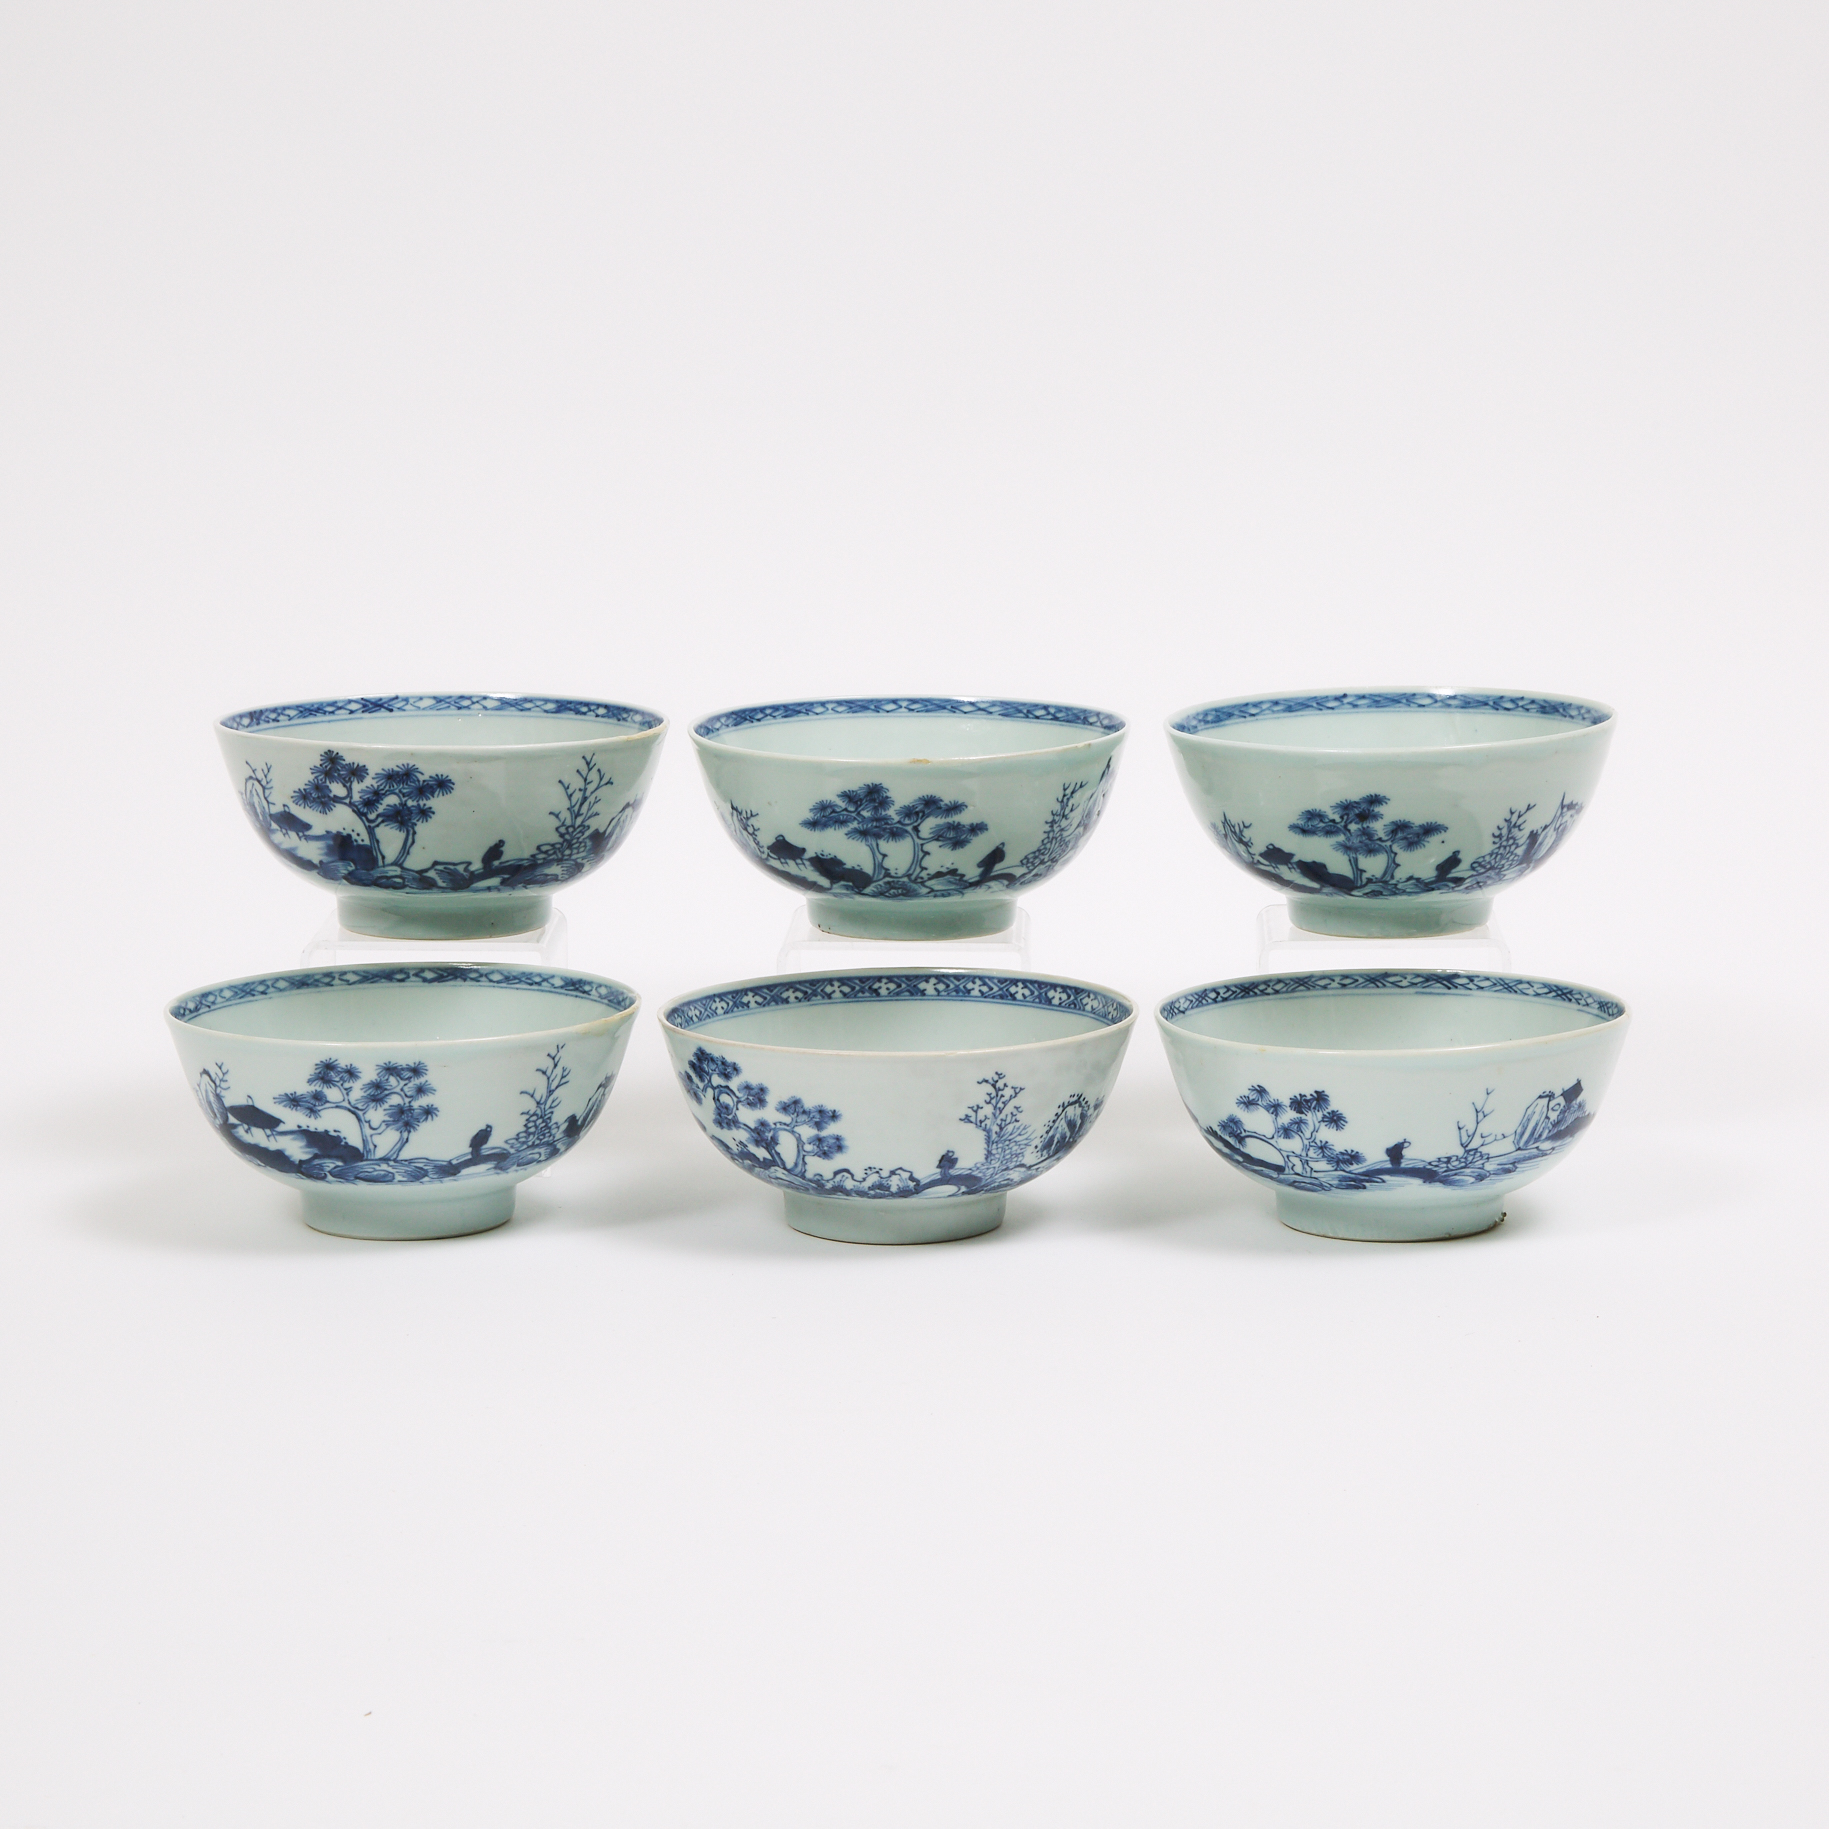 A Set of Six 'Scholar on Bridge' Pattern Small Bowls from the Nanking Cargo, Qianlong Period, Circa 1750